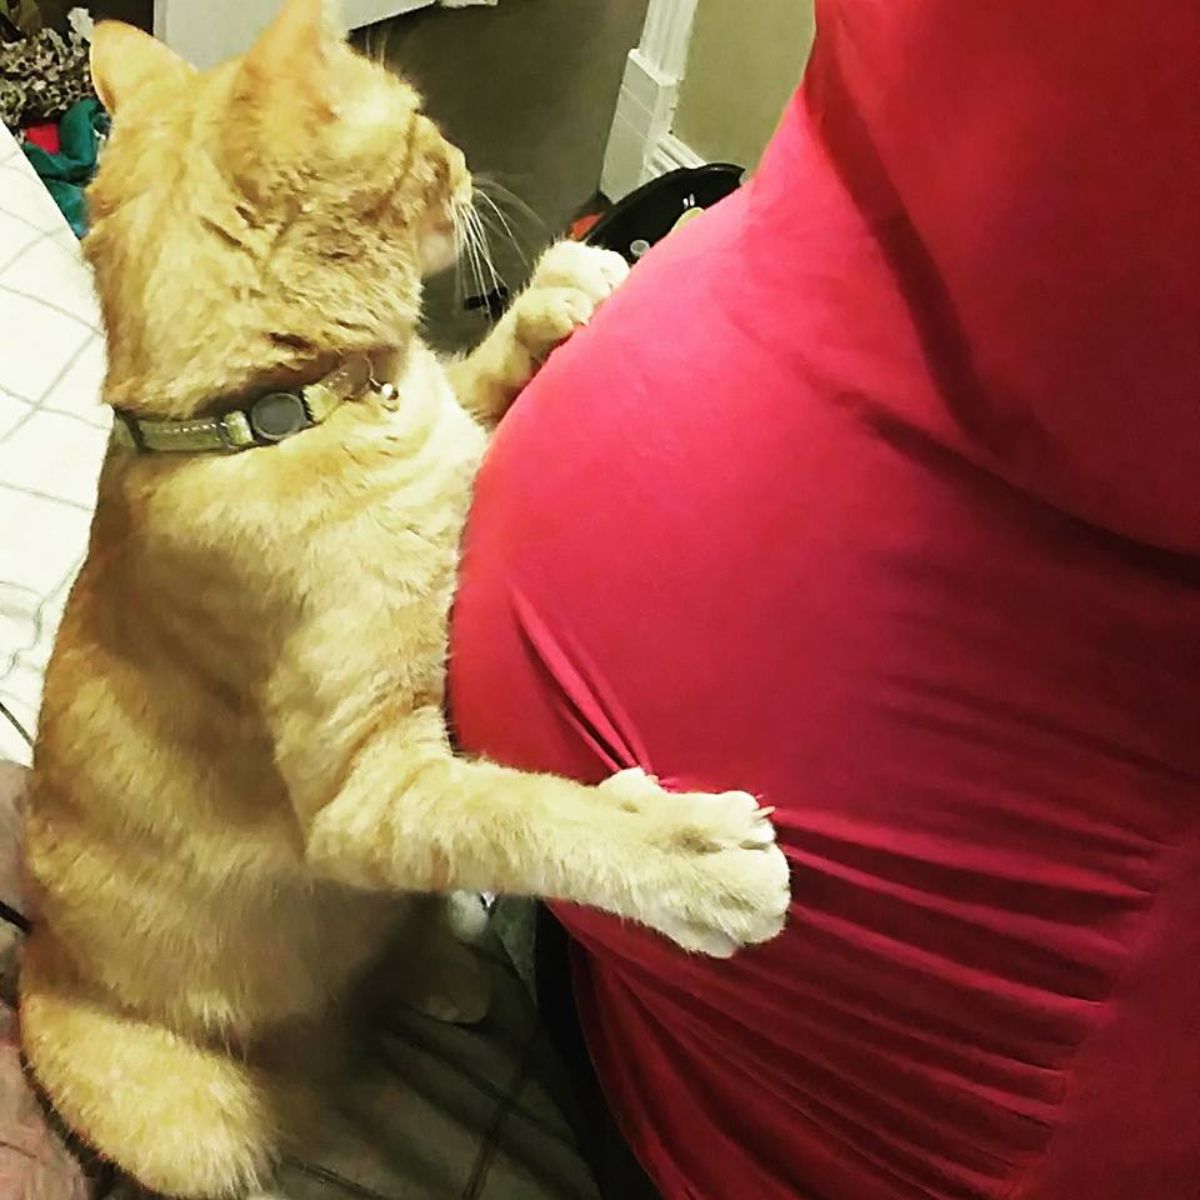 orange cat hugging a pregnant person's stomach